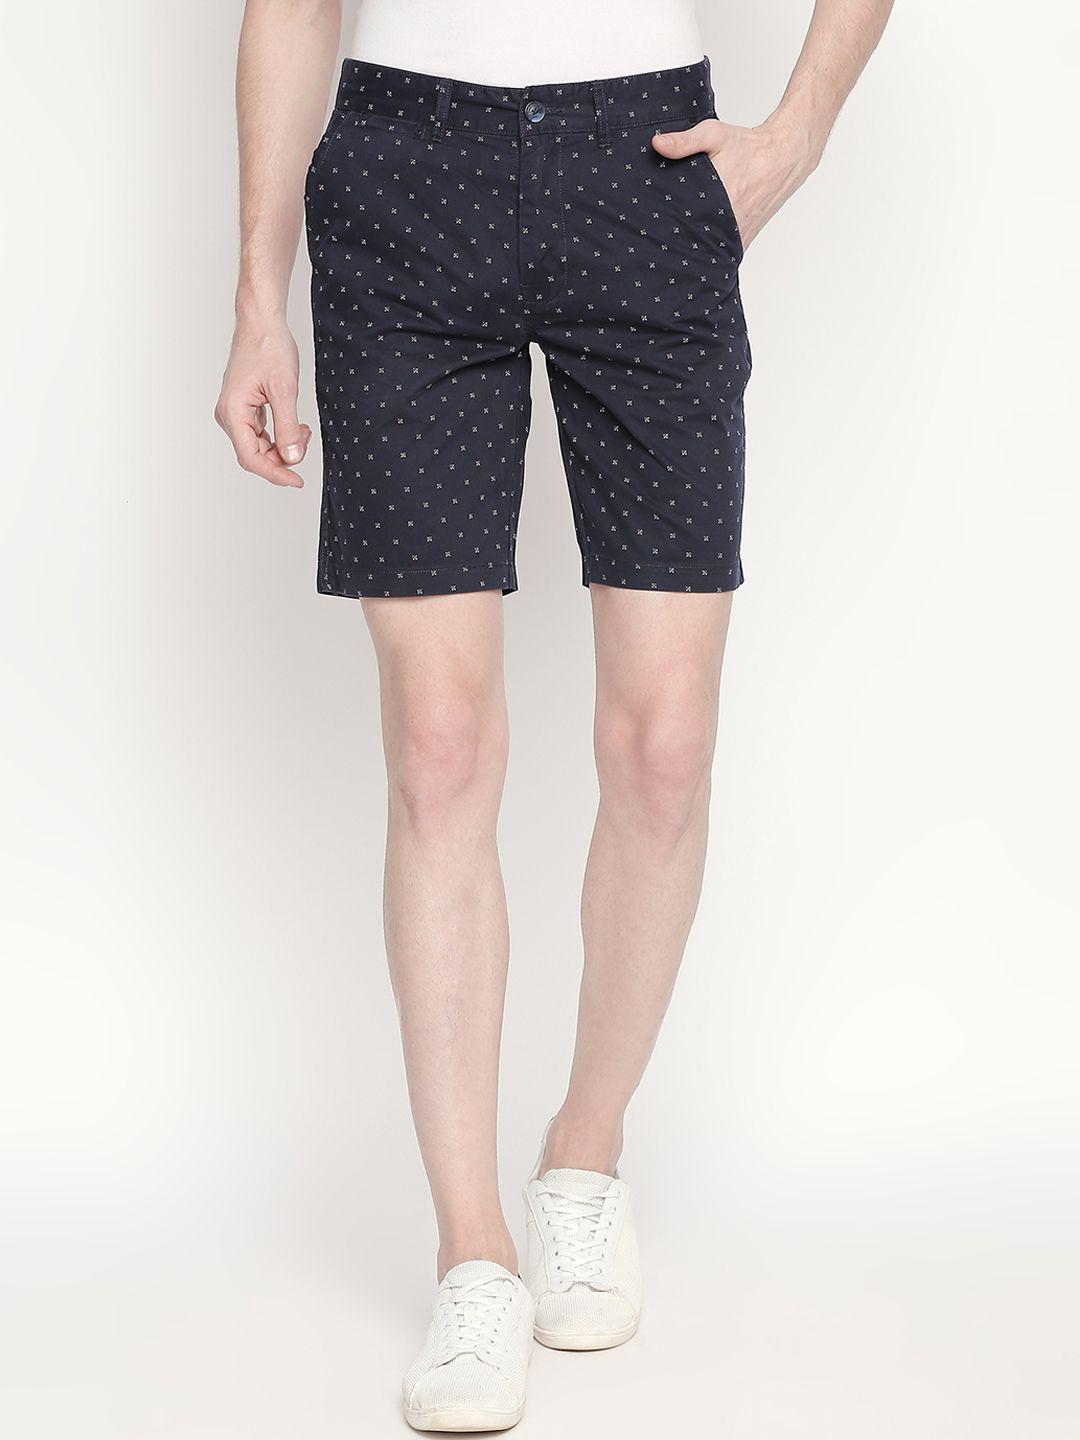 urban-ranger-by-pantaloons-men-navy-blue-printed-slim-fit-regular-shorts